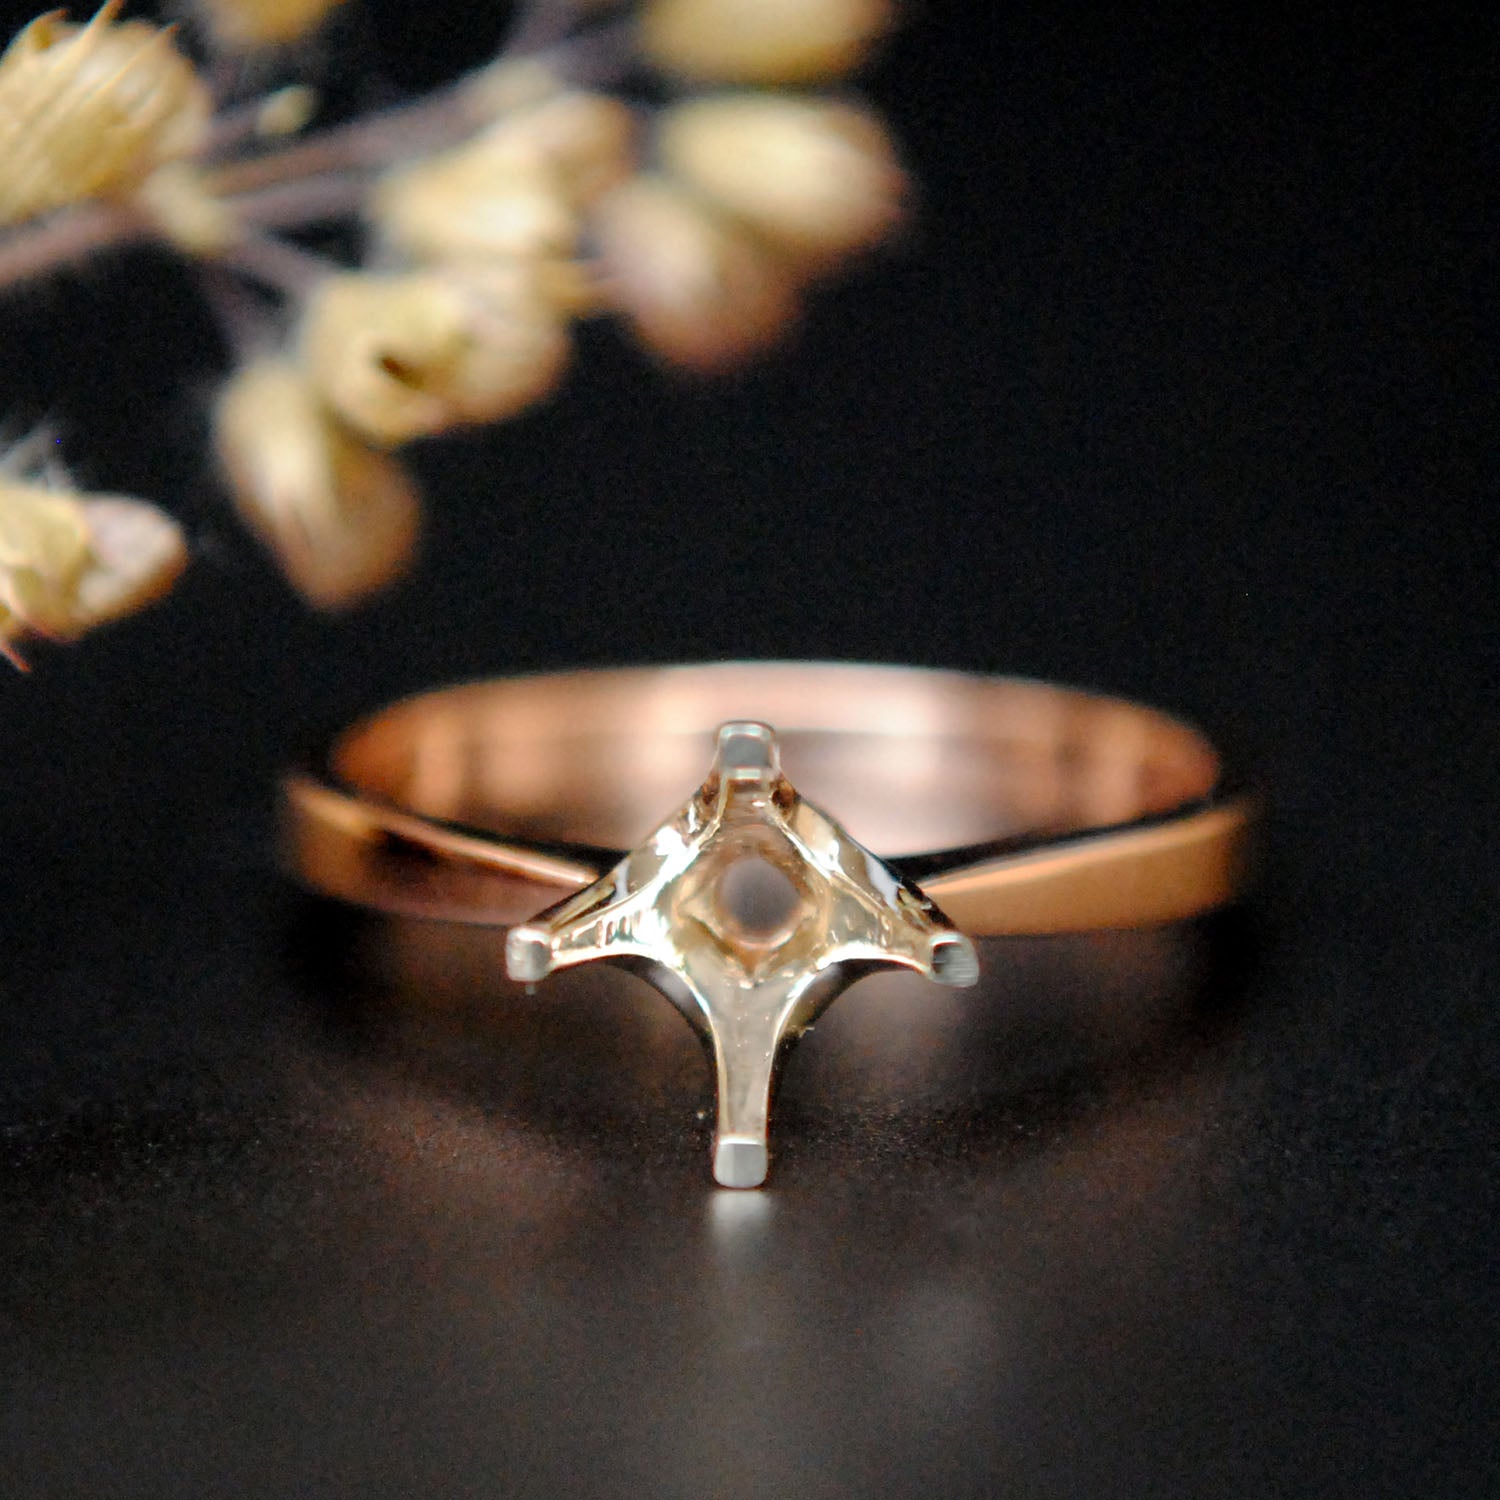 Resetting - Unworn Inherited Diamond Ring to New Engagement Ring | The  Perfect Setting, Inc